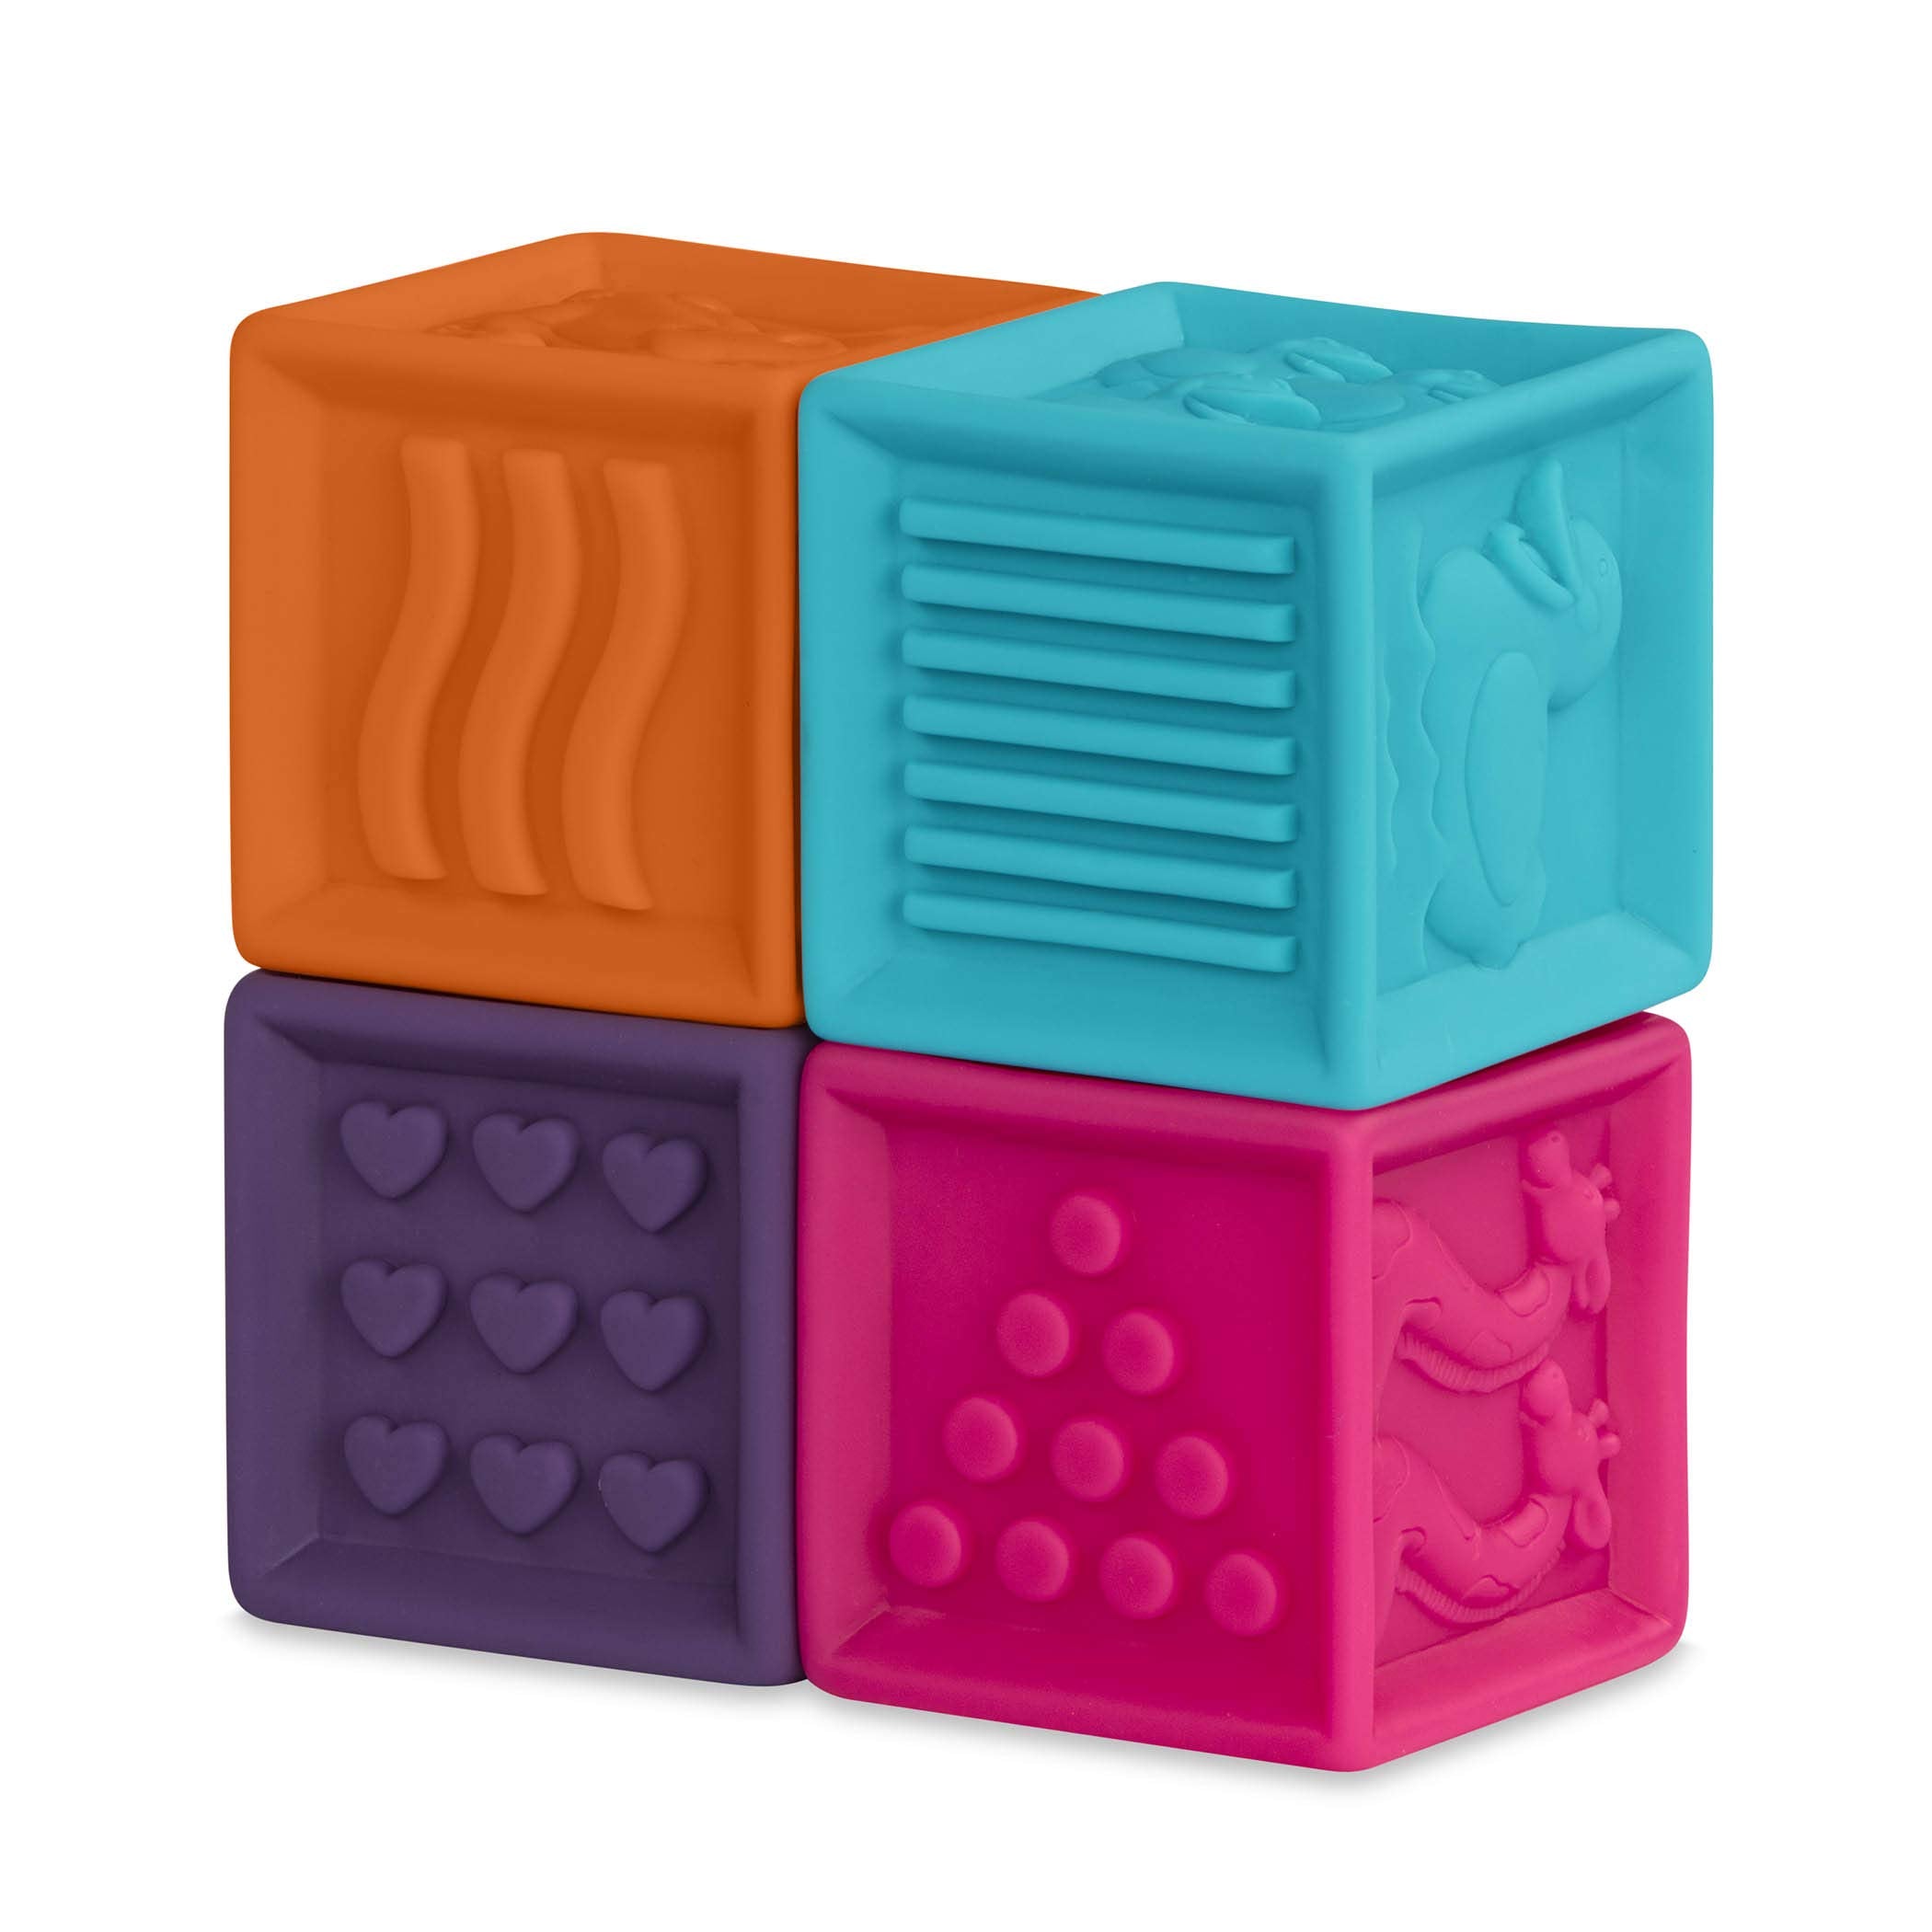 b toys building blocks